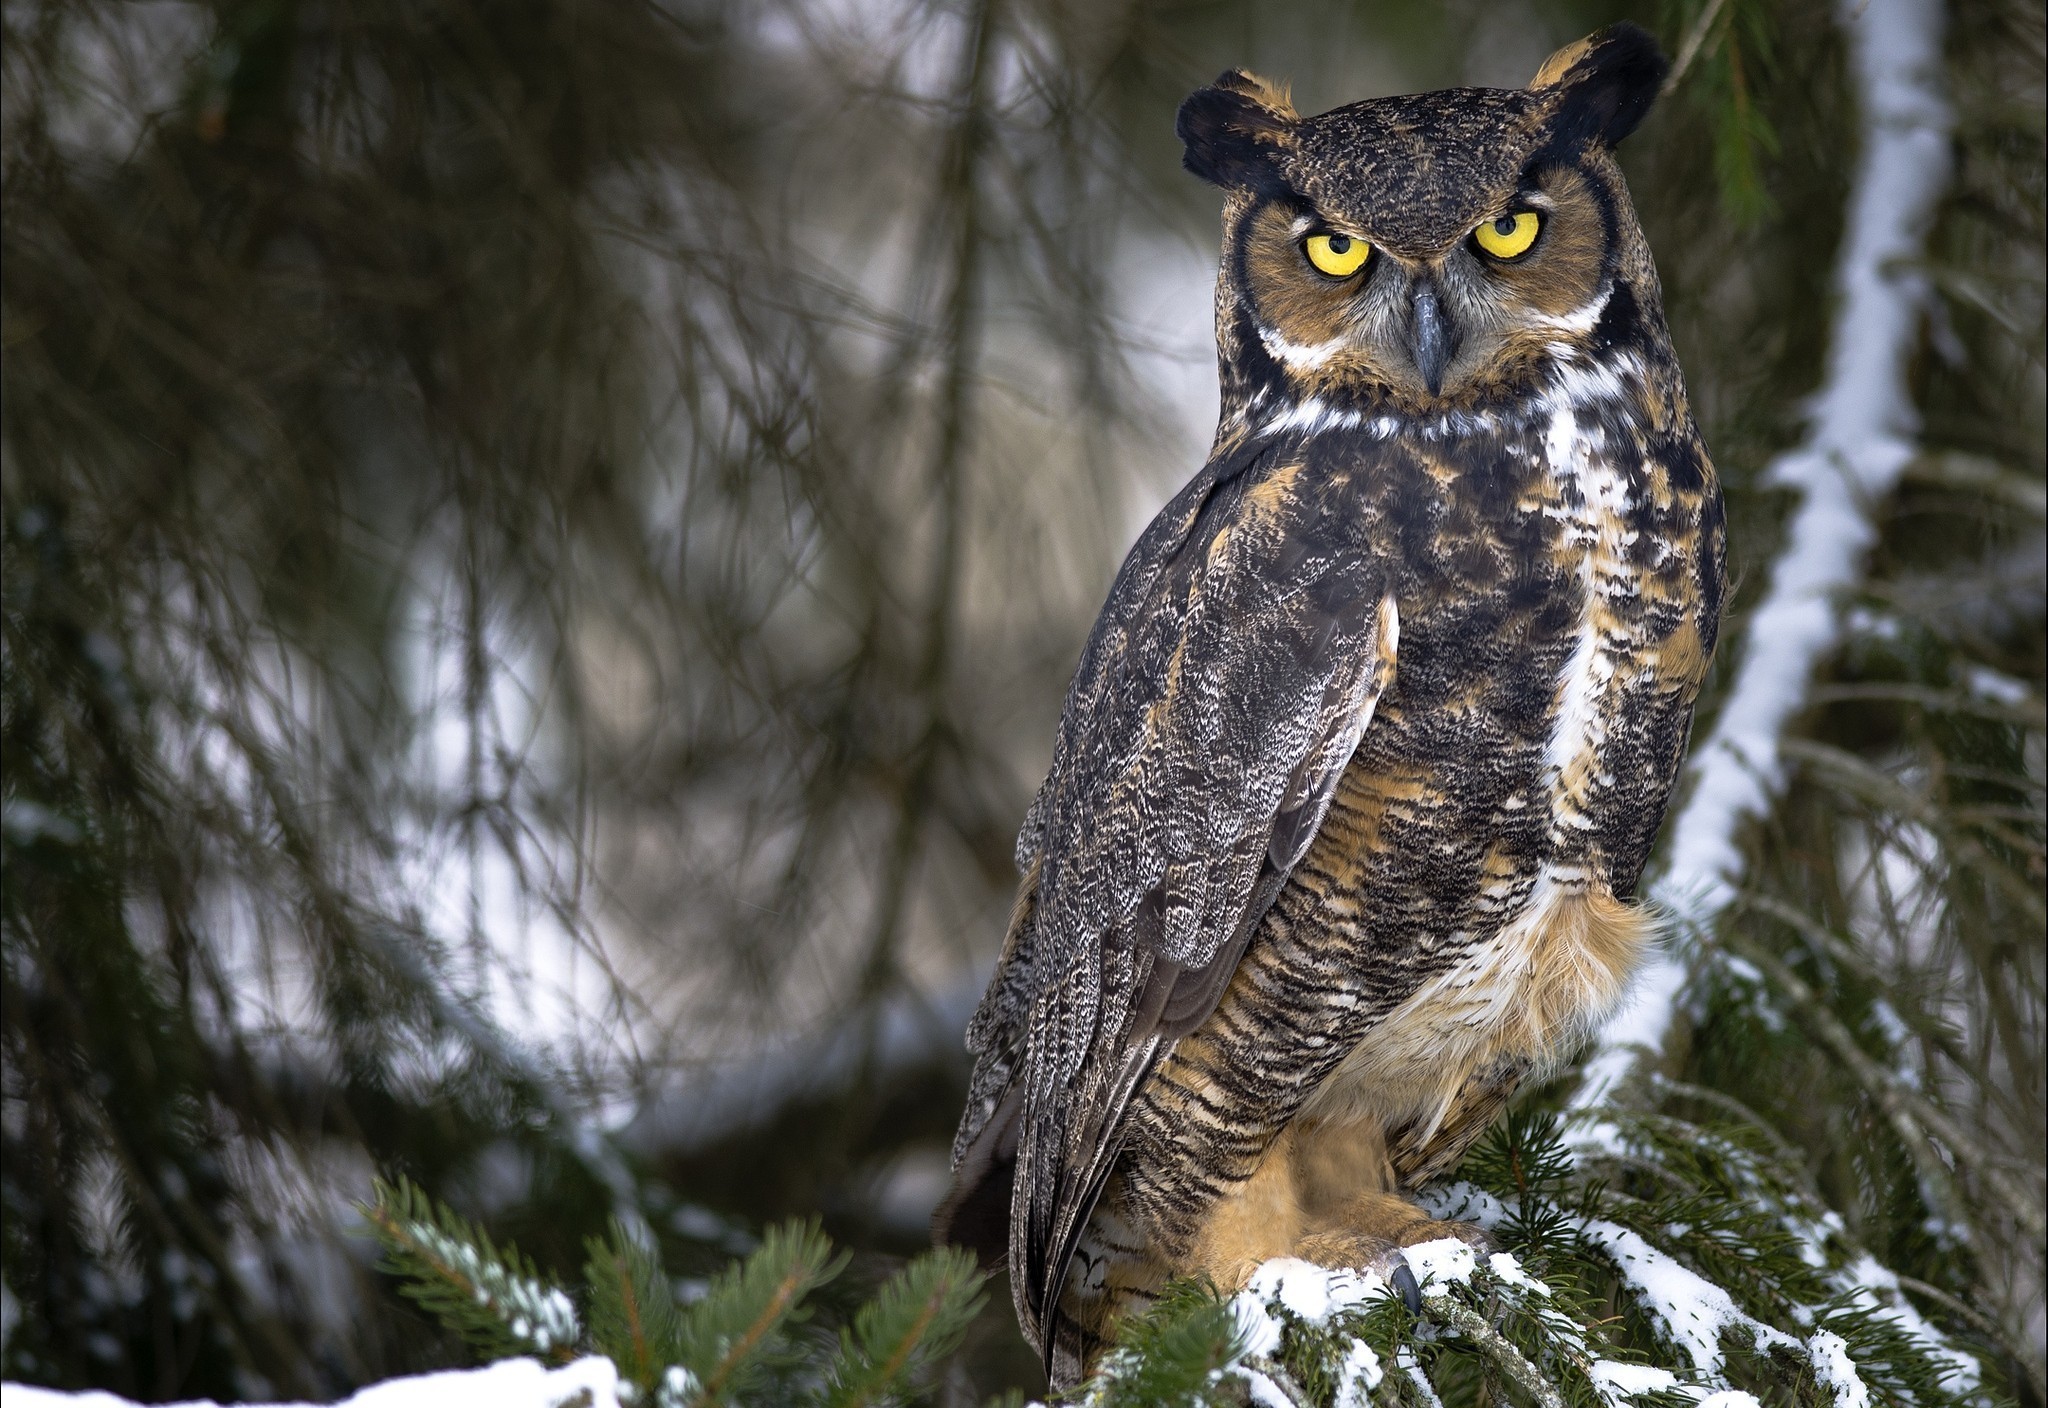 High Resolution Desktop Wallpaper Of Owl Image Eagle Feathers